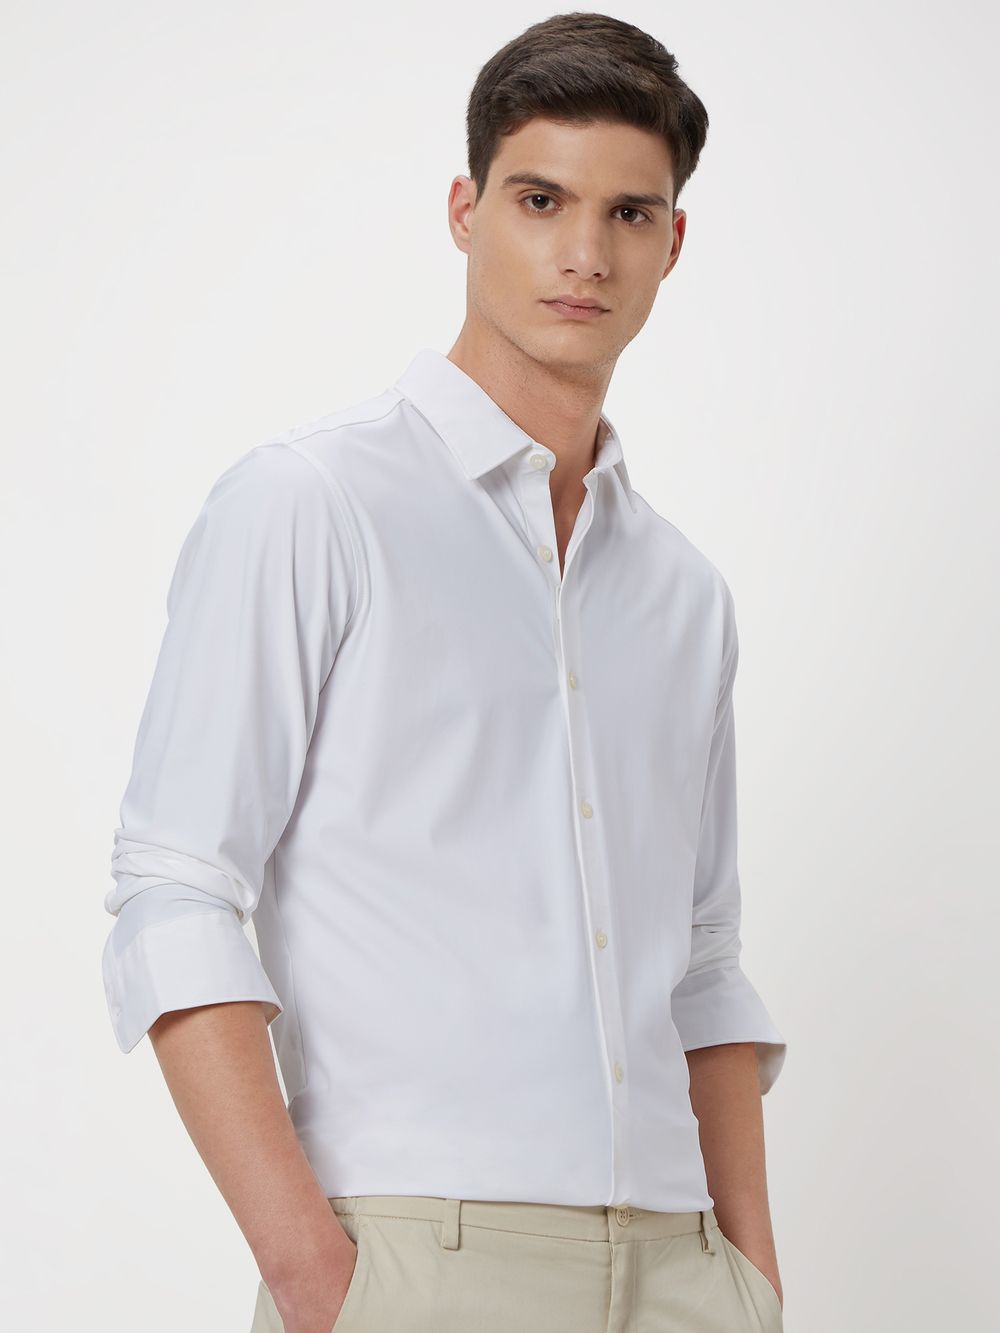 White Knitted Plain Stretch Shirt